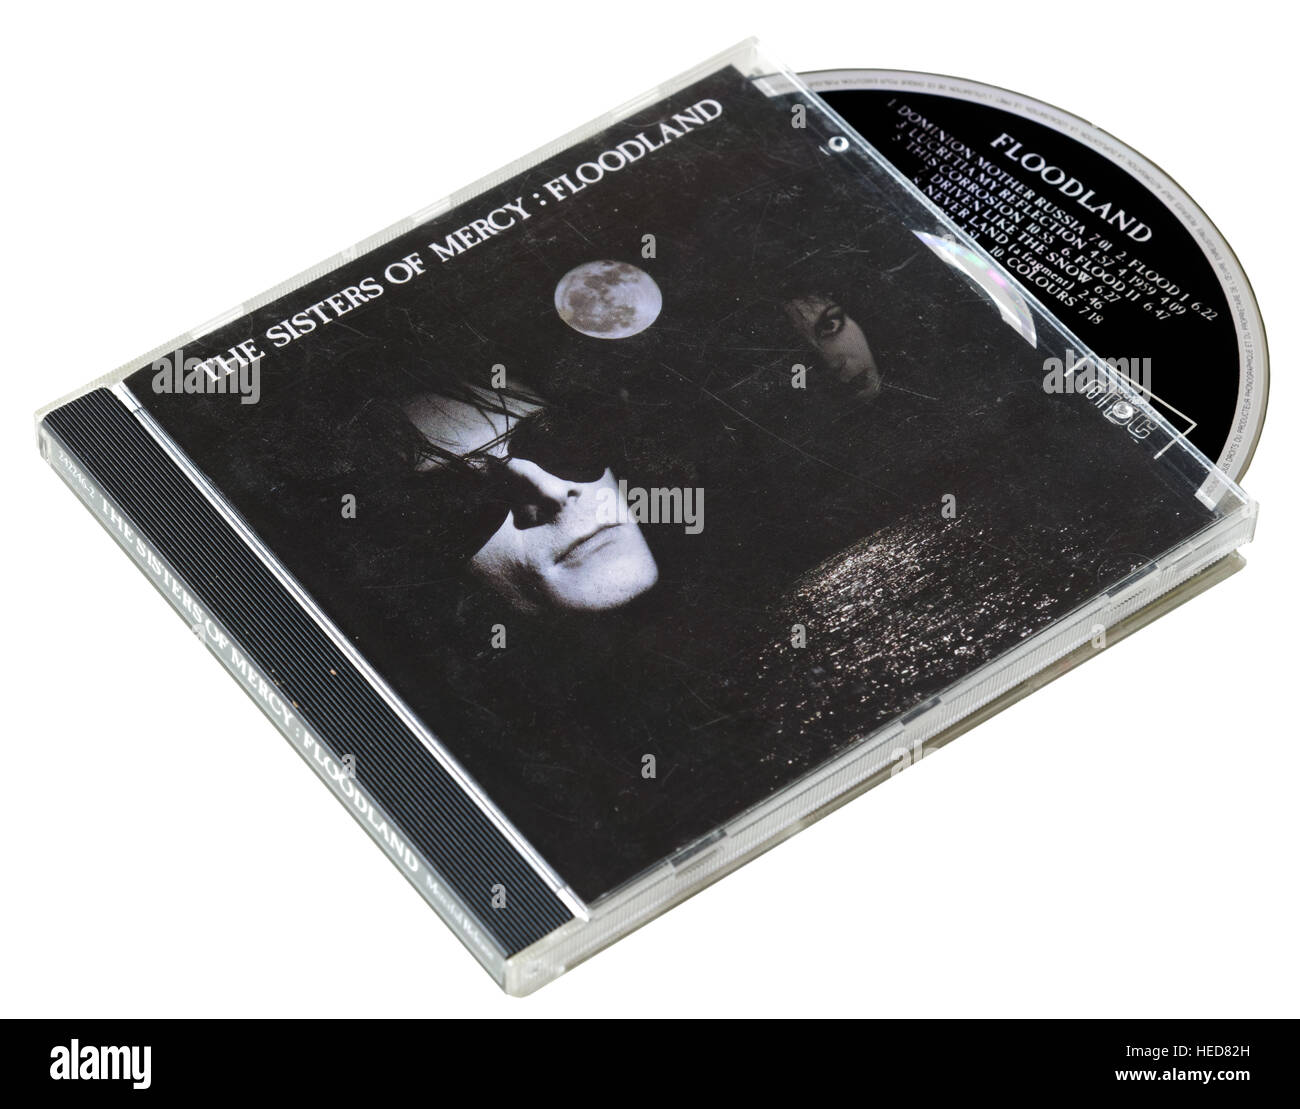 The Sisters of Mercy Floodland CD Stockfoto